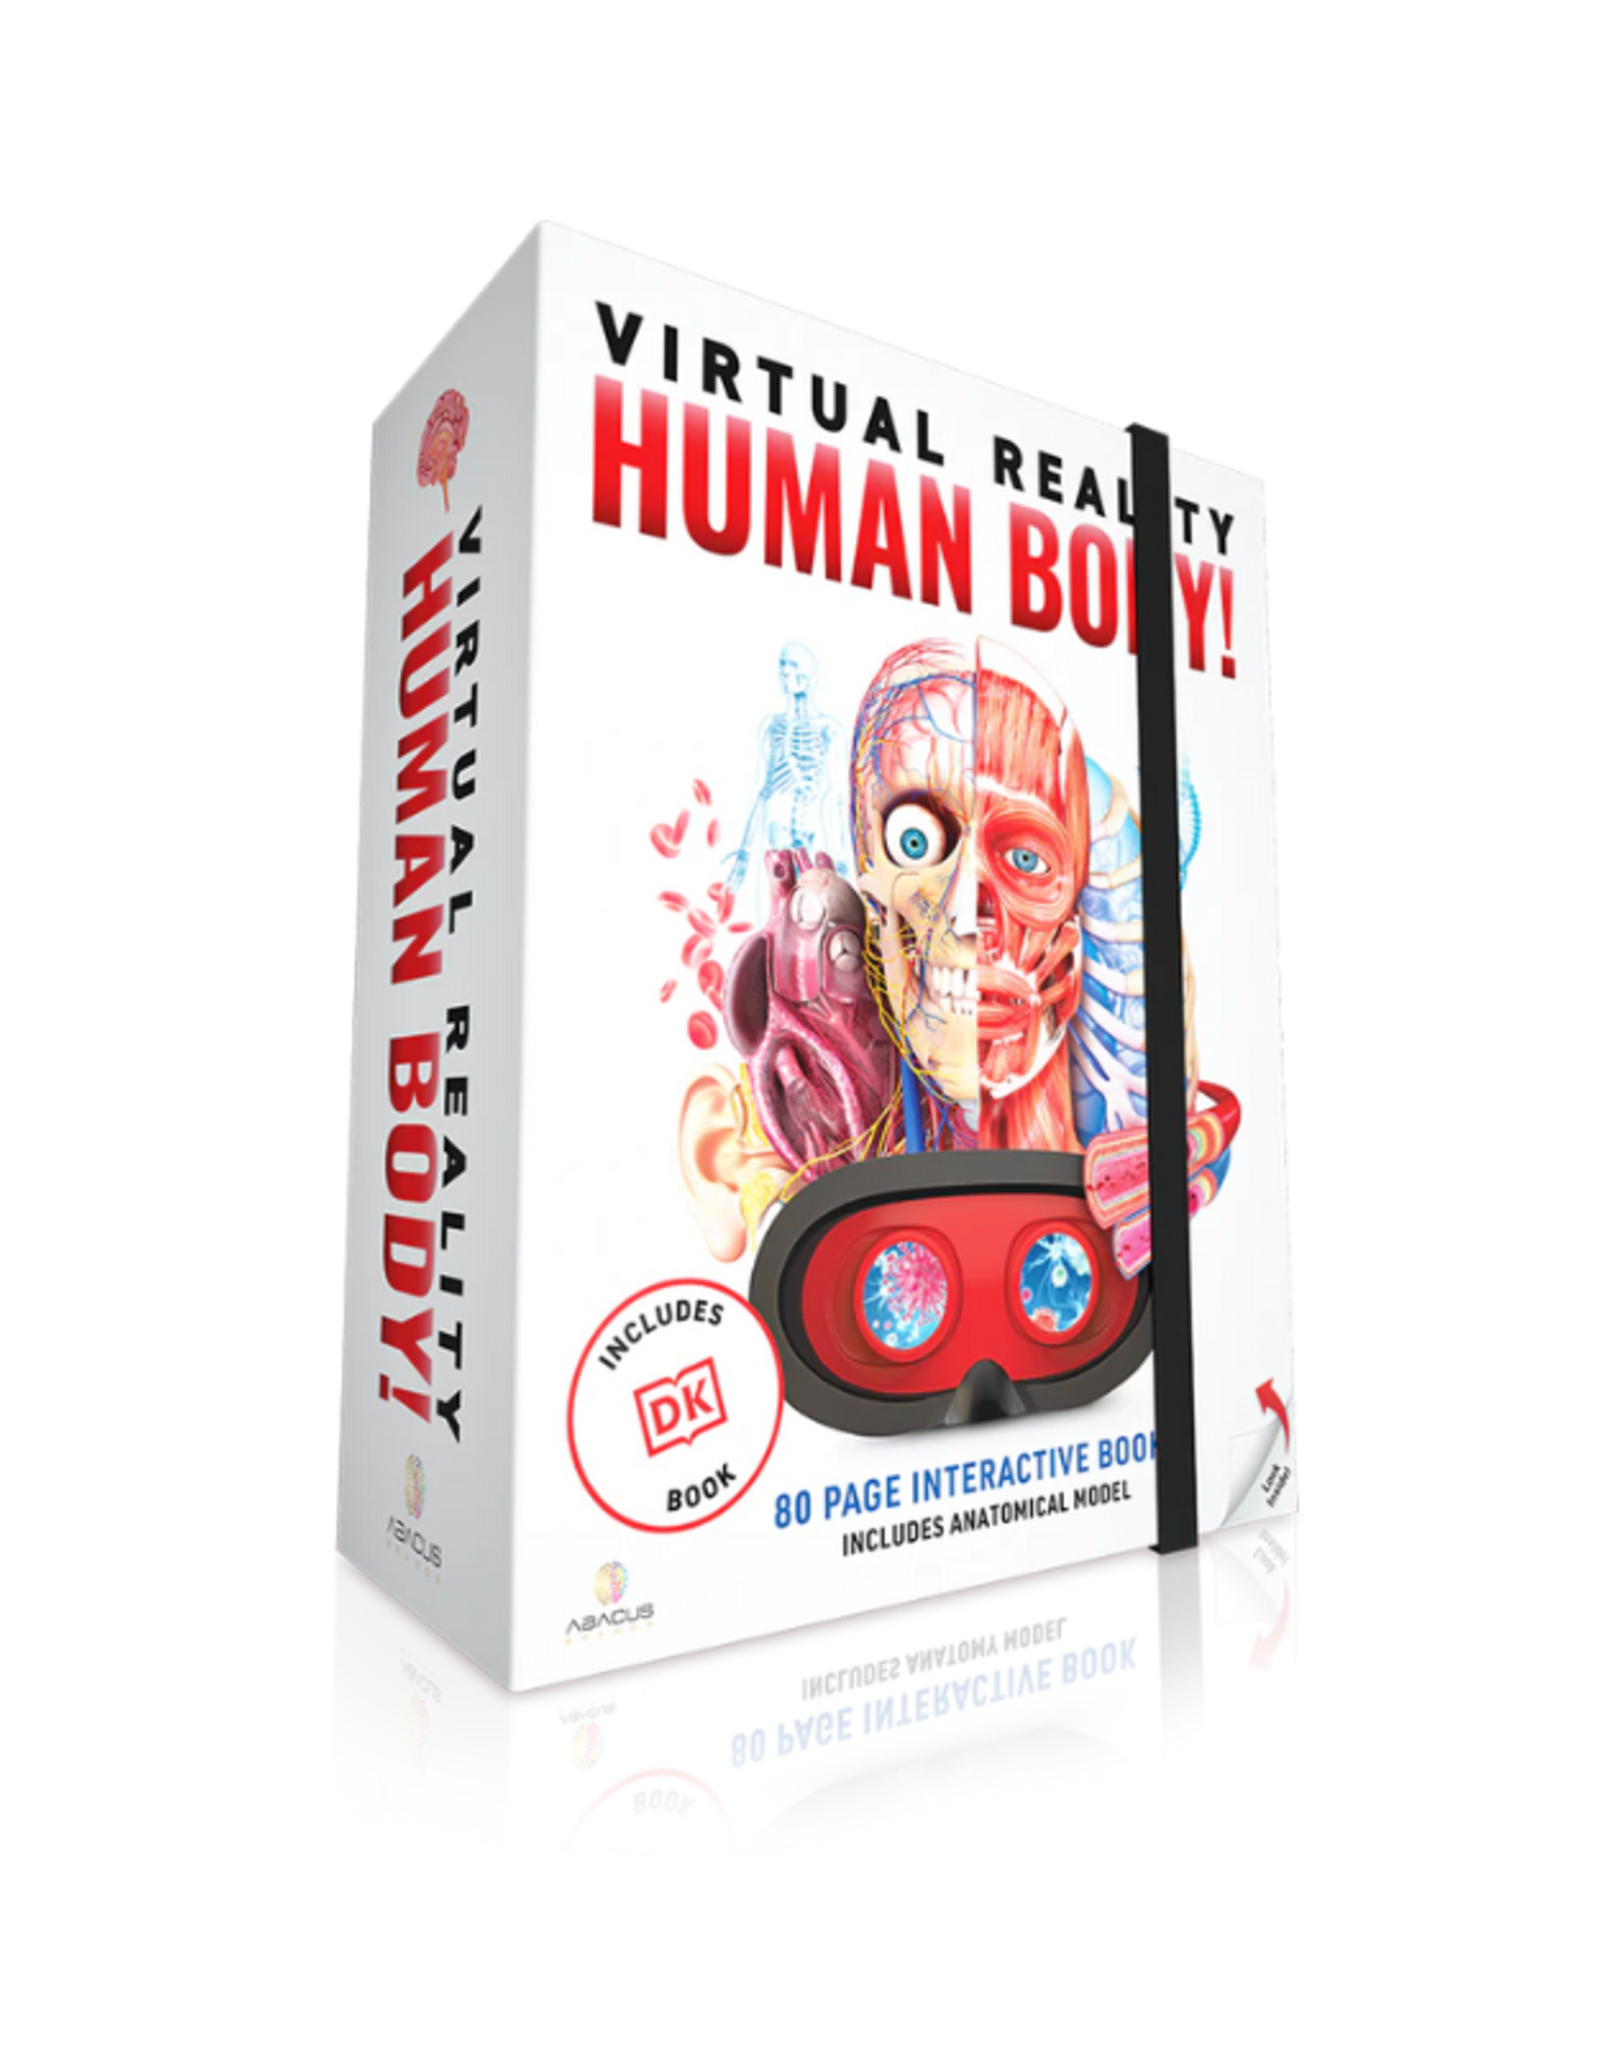 Abacus Brands Virtual Reality Human Body